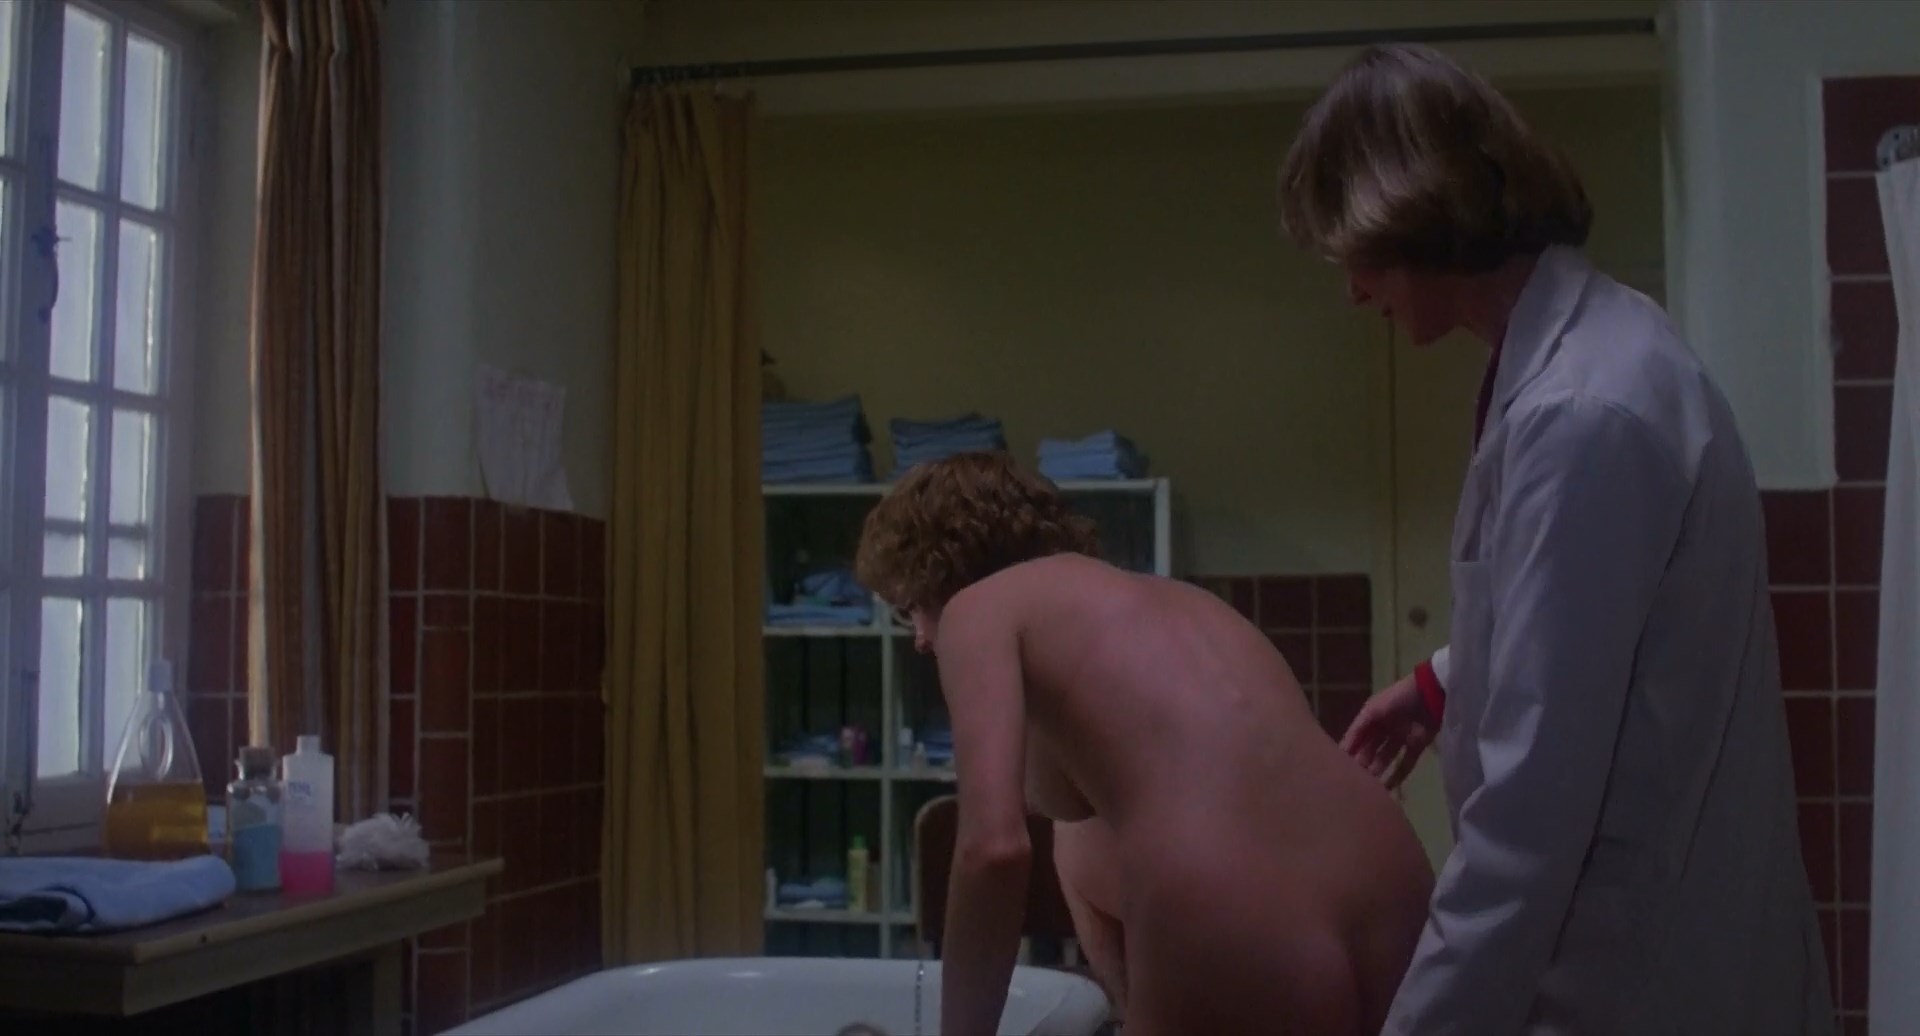 Nude Video Celebs Lisa Langlois Nude Phobia 1980